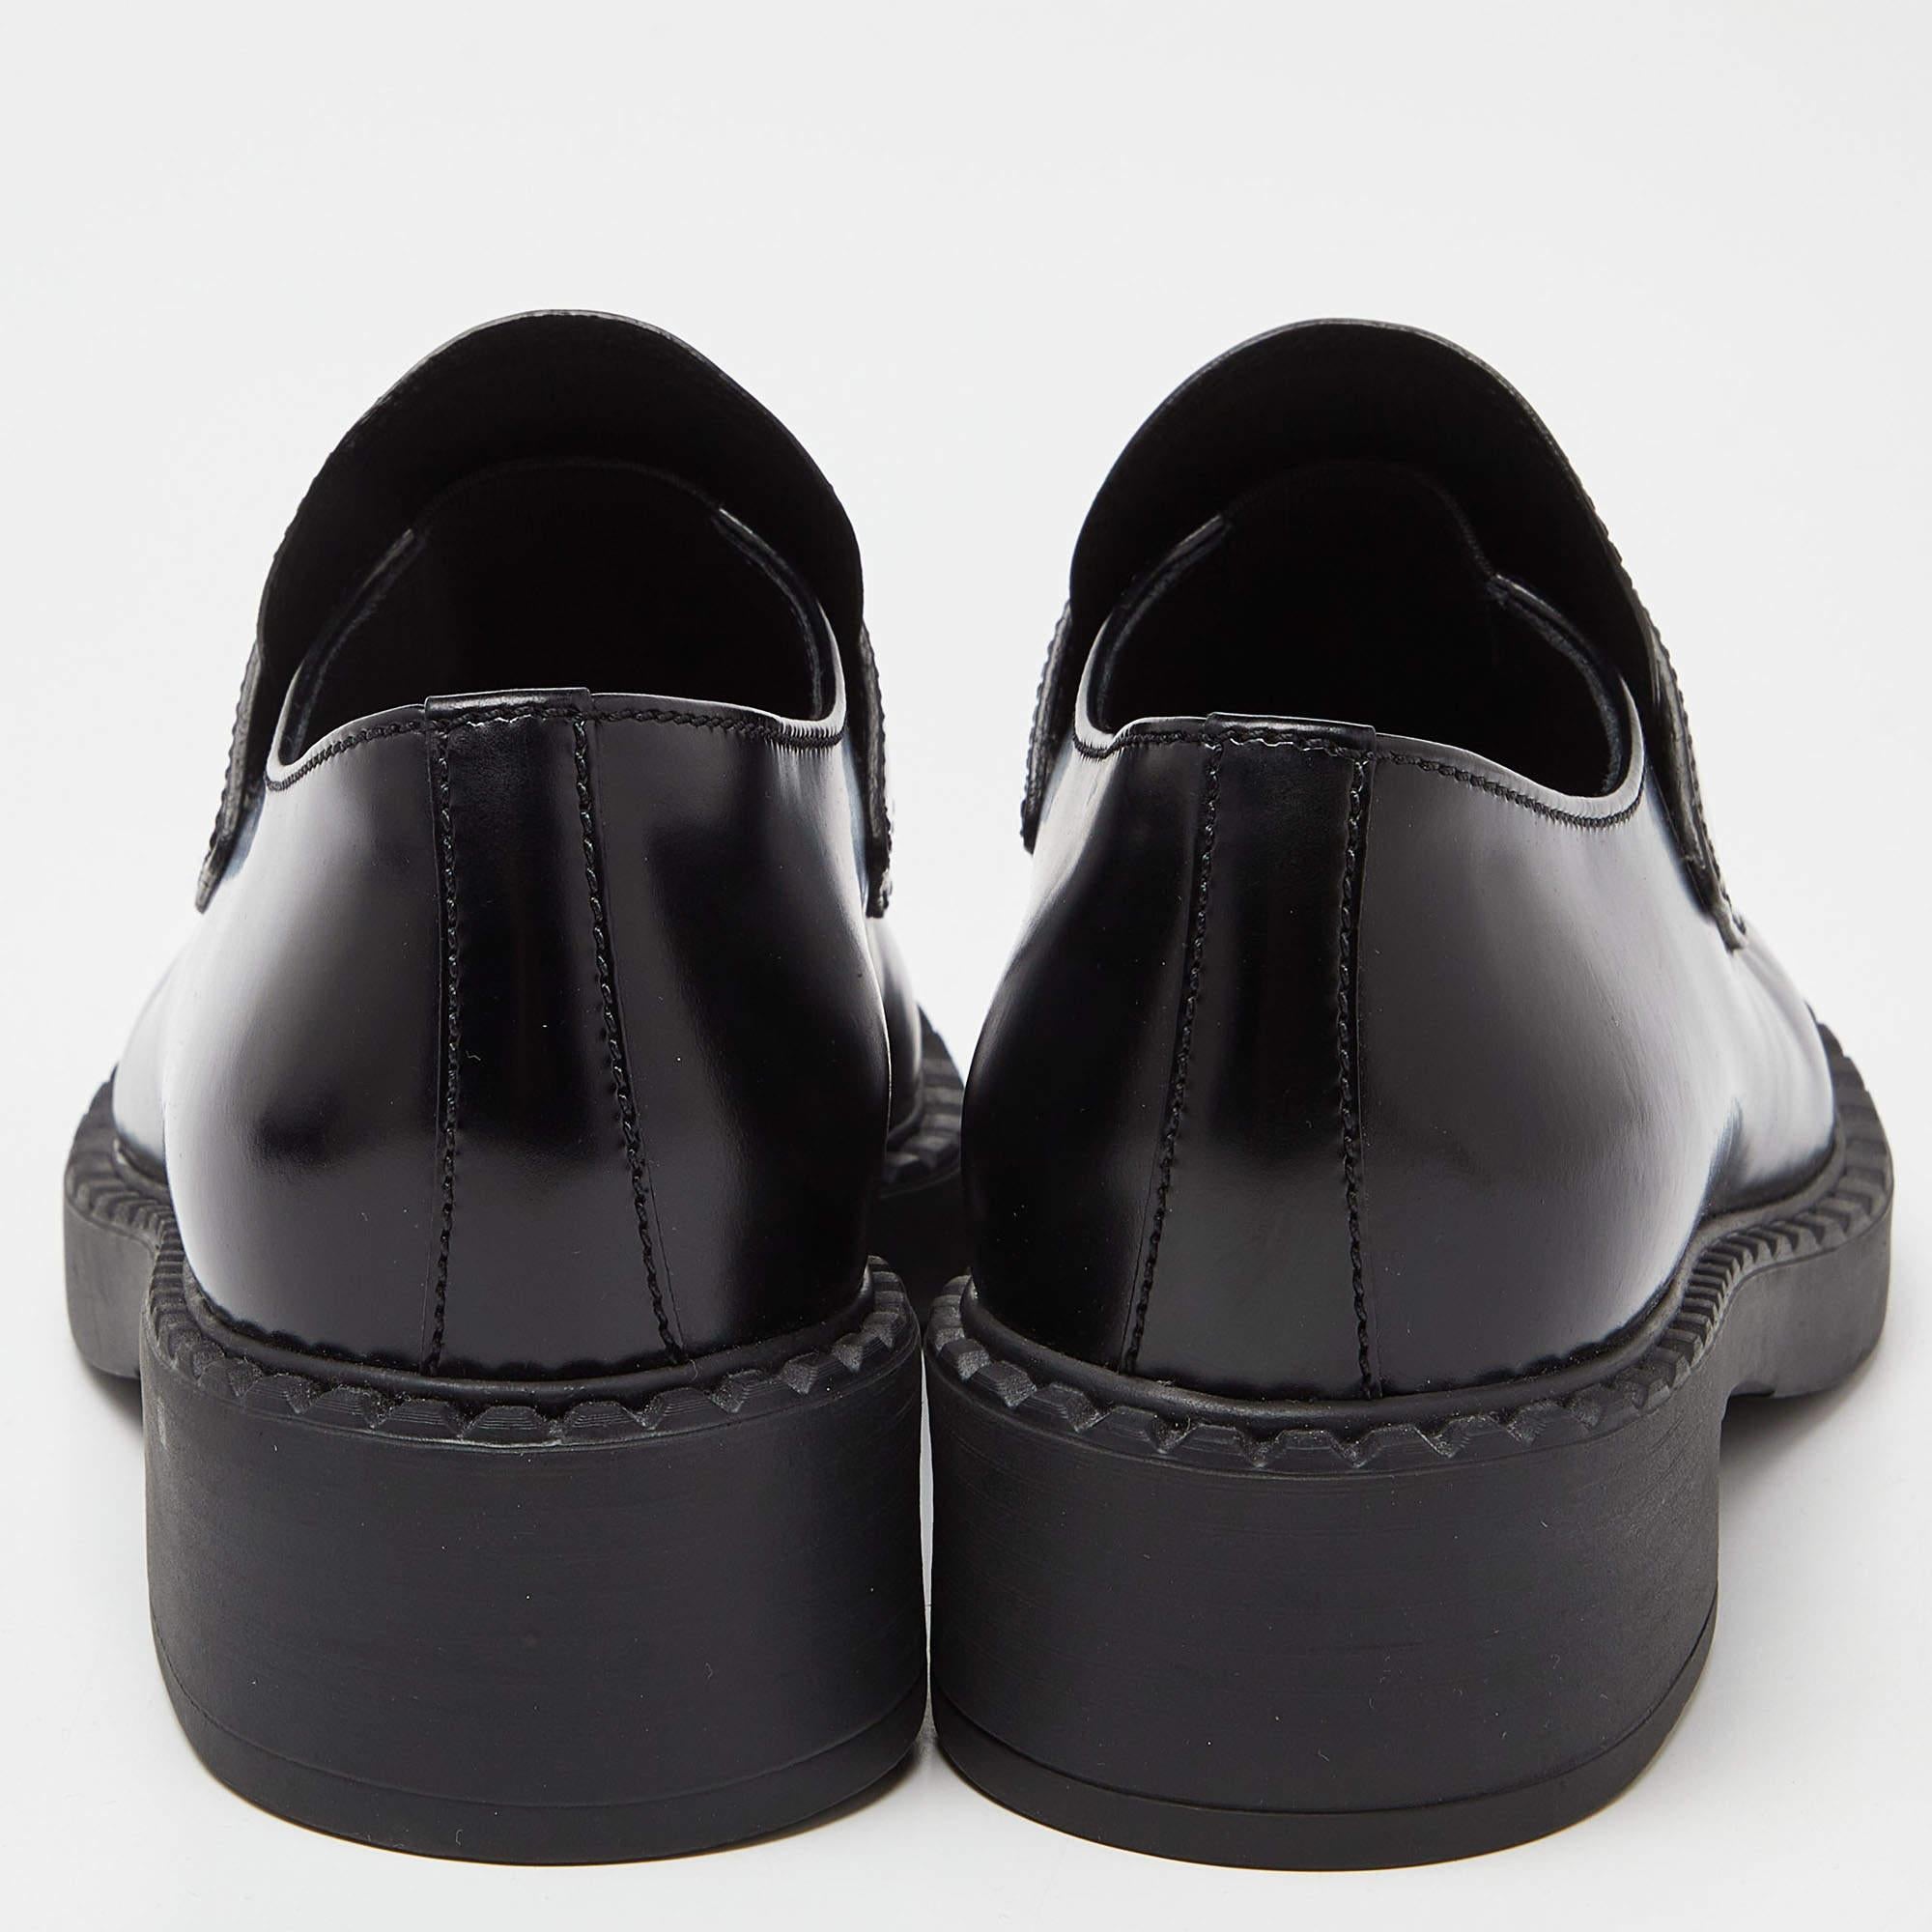 Prada Black Patent Leather Platform Loafers Size 36.5 1